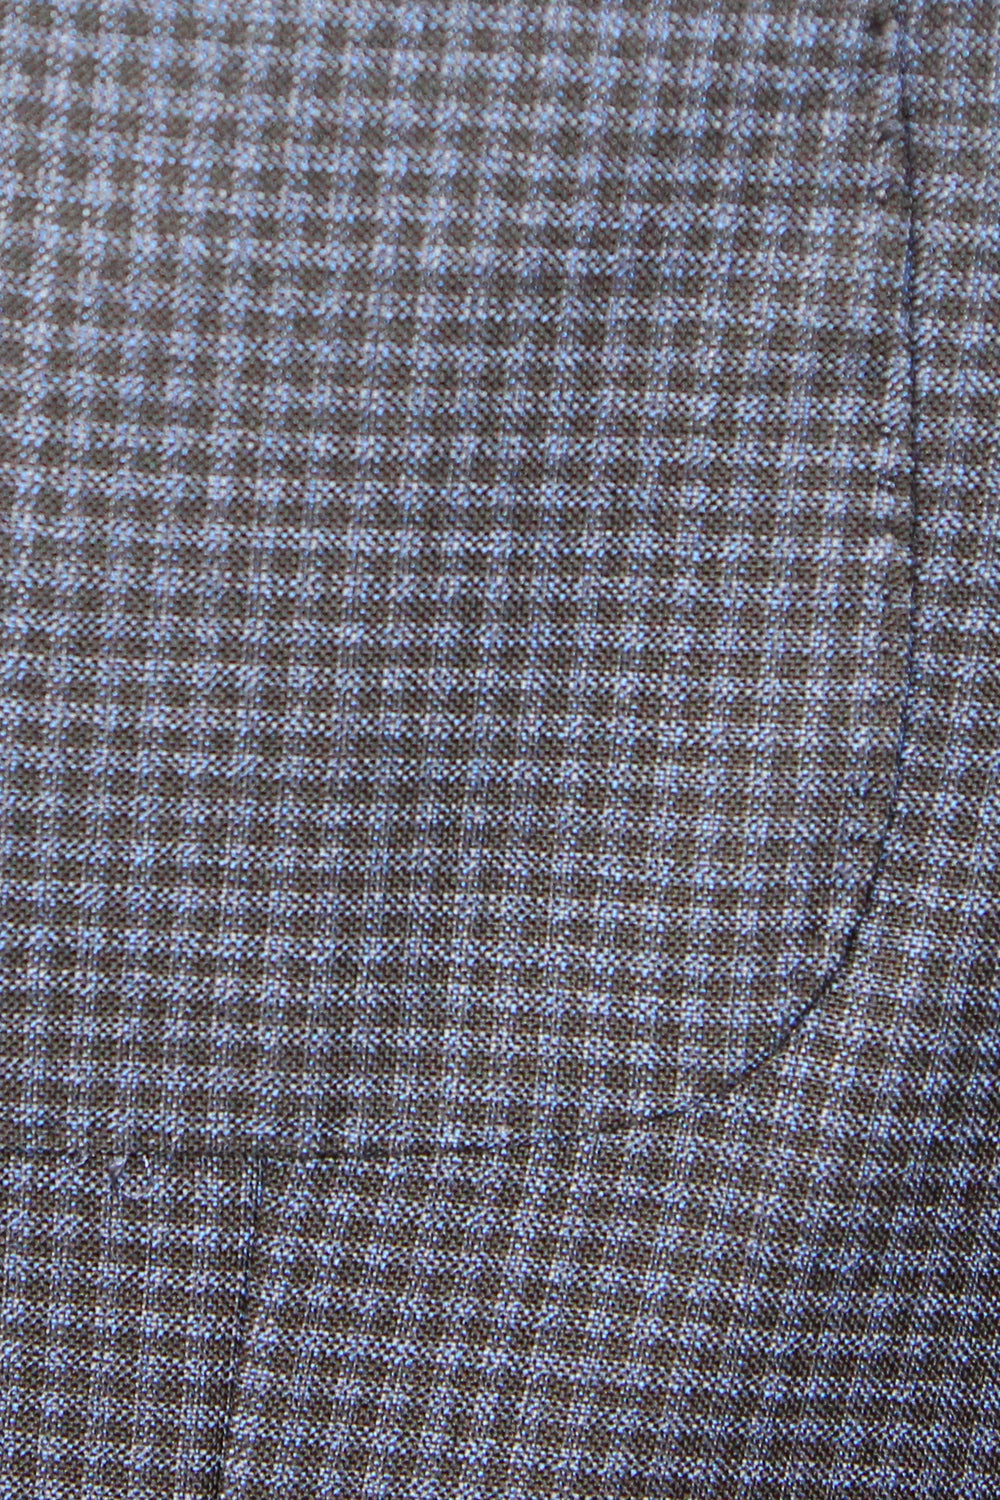 SARTITUDE Giacca in fresco lana a quadretti